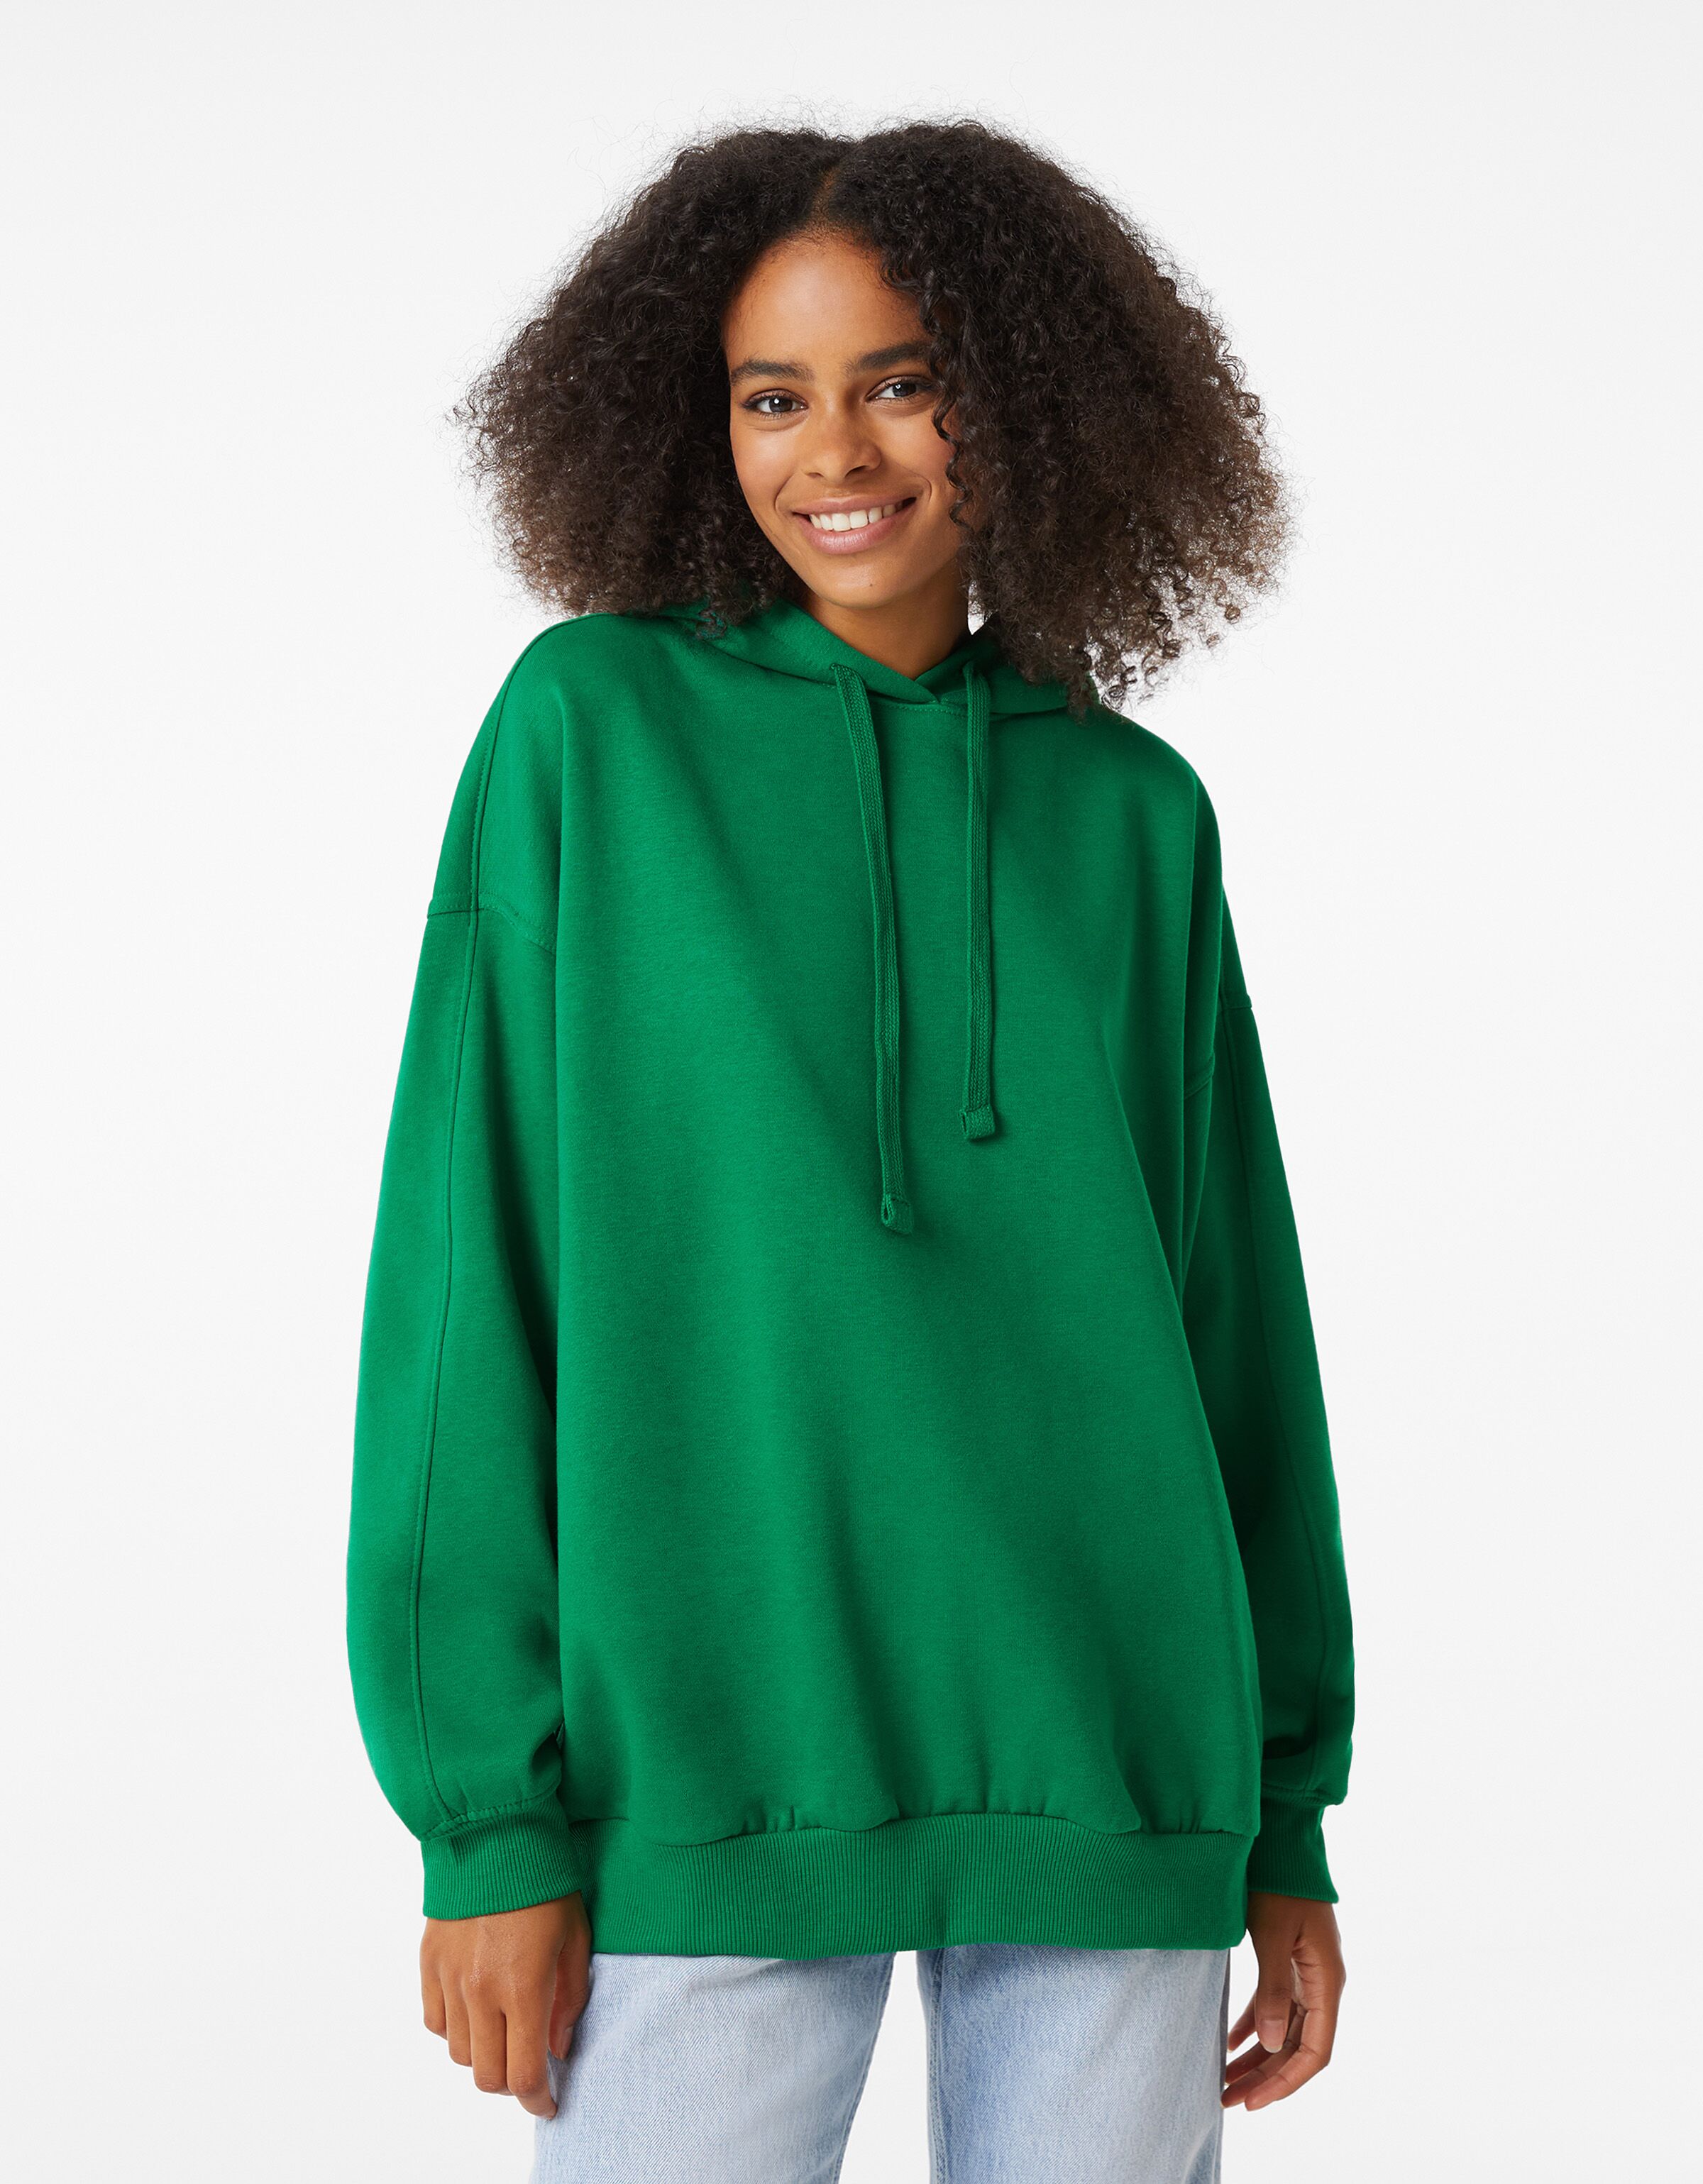 WOMEN FASHION Jumpers & Sweatshirts Sweatshirt Ribbed Bershka sweatshirt discount 84% Gray XS 